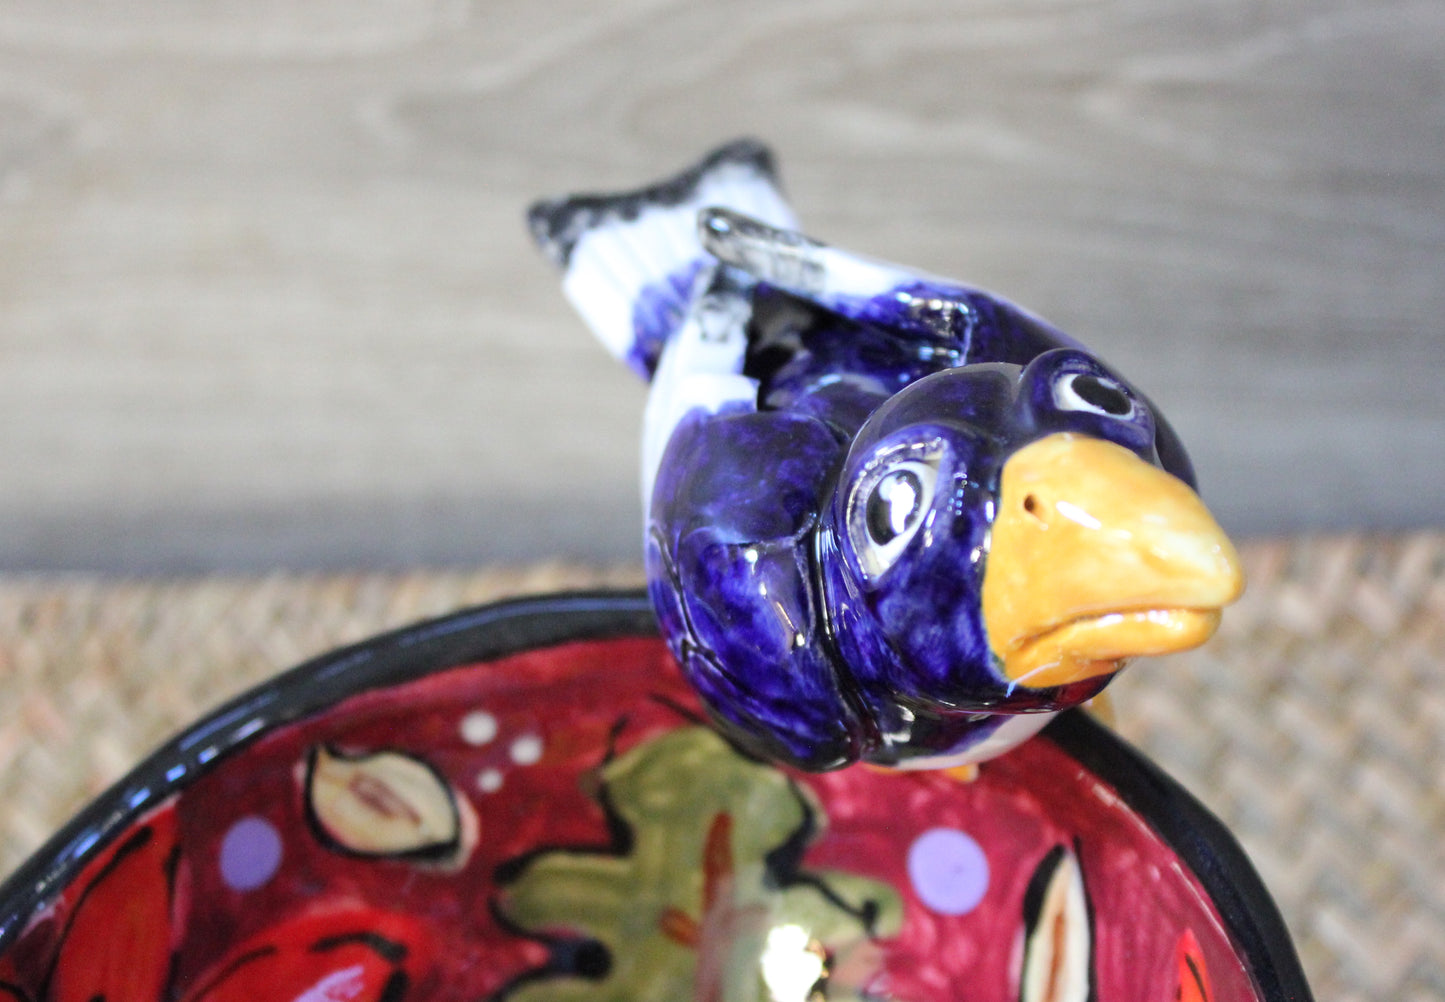 Ceramic Blue Bird Sculpture on Homemade Decorative Tabletop Knick Knack Bowl